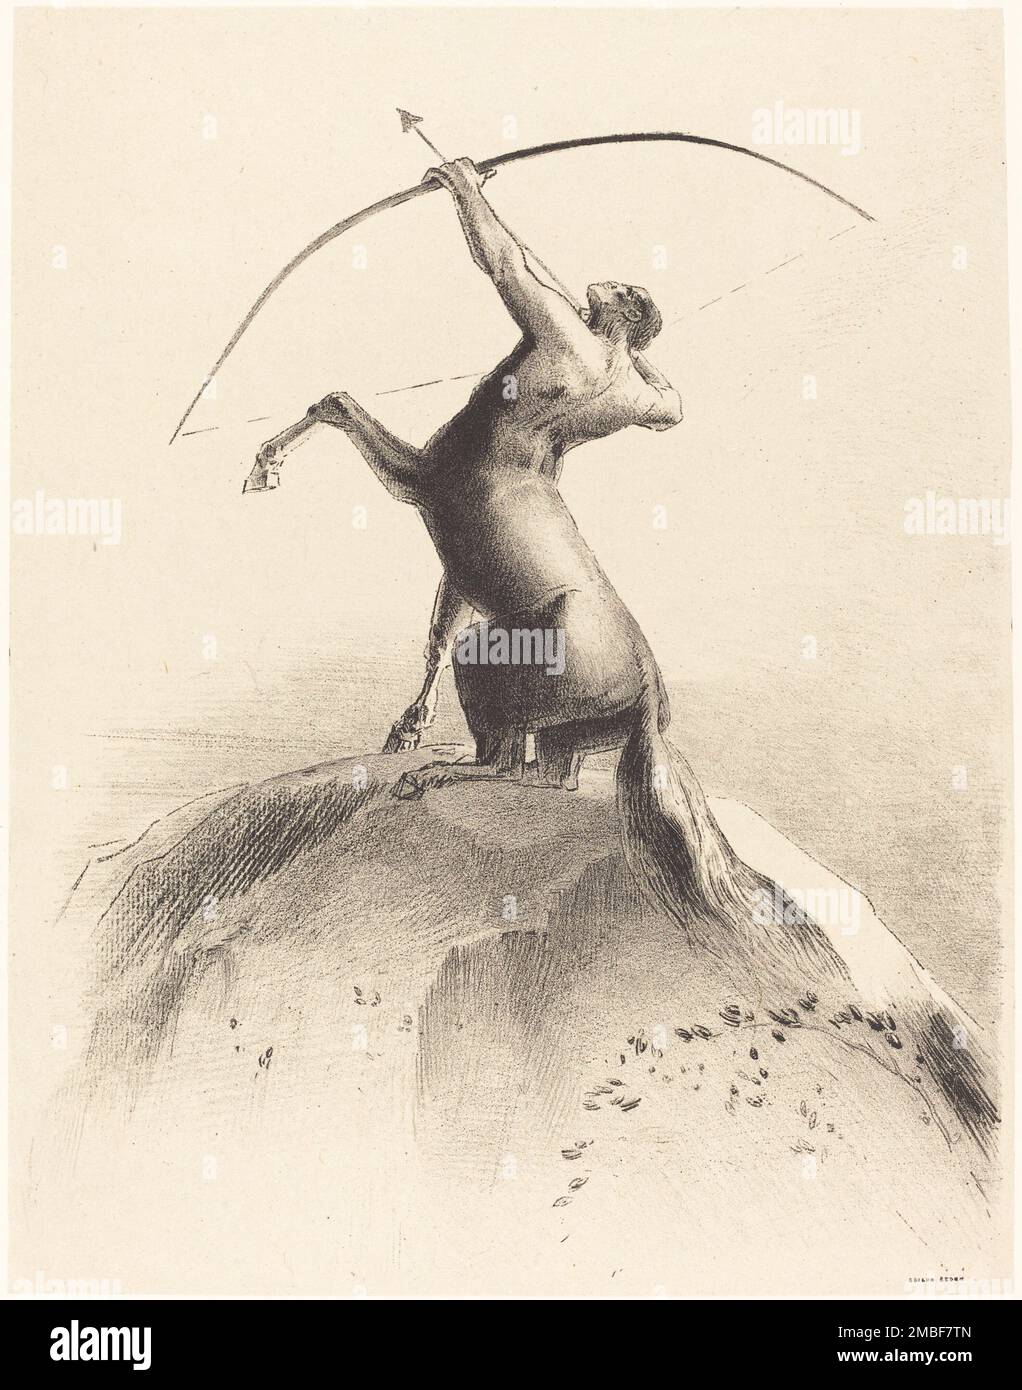 Centaur visant les Nues (Centaur aiming at the Clouds), 1895. Stock Photo